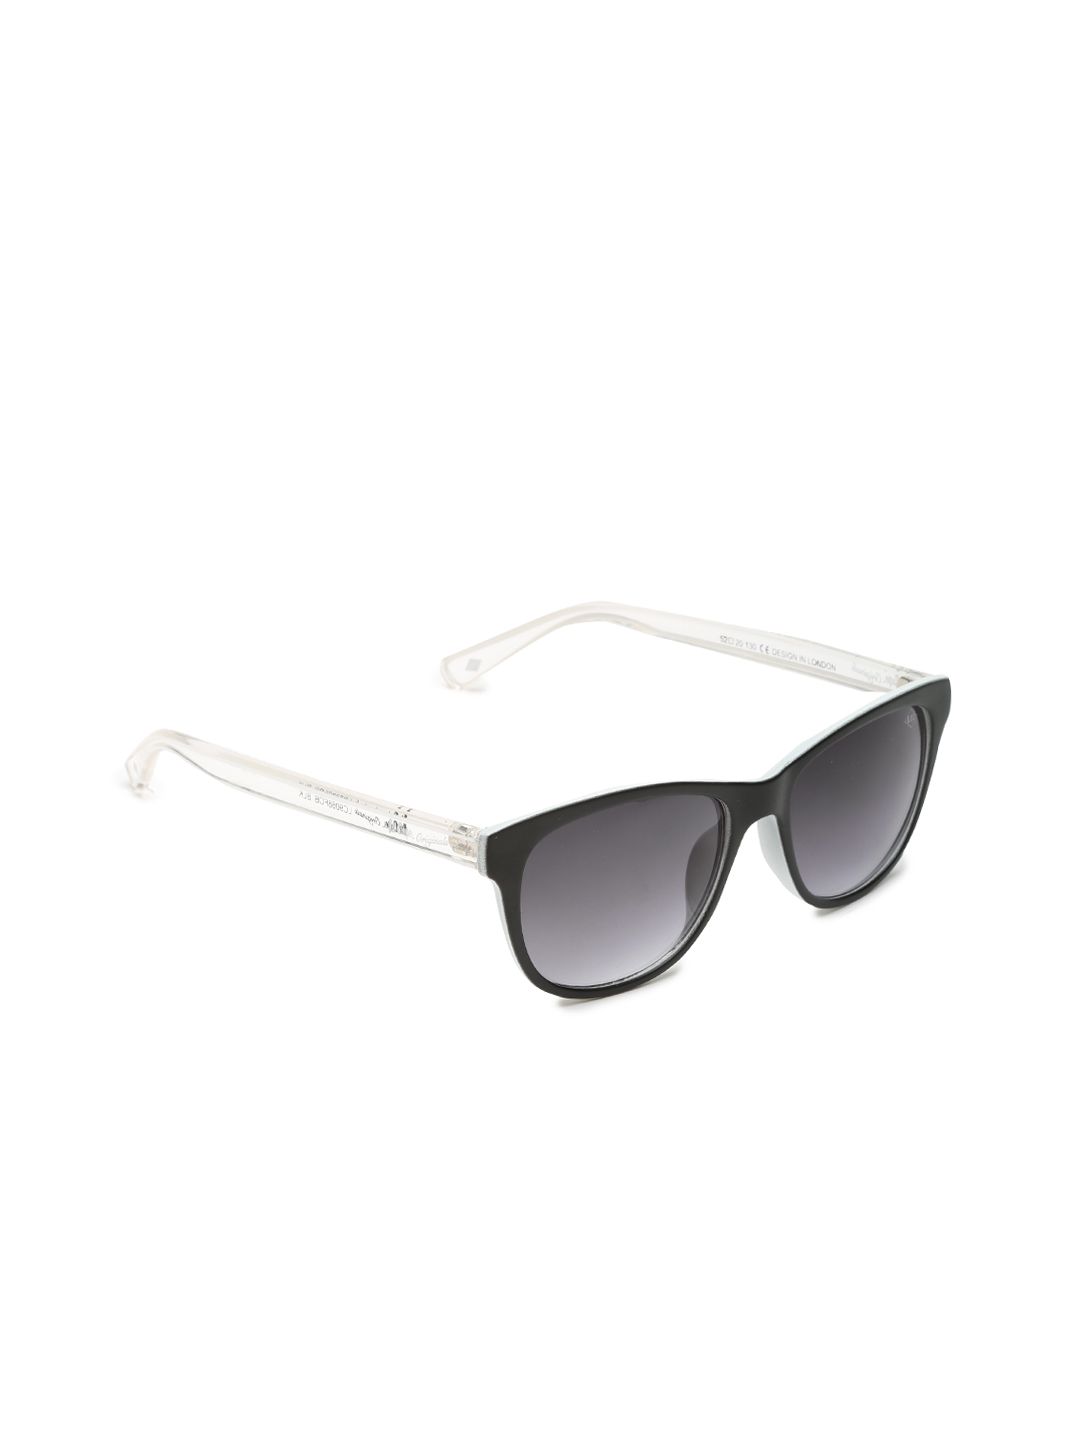 Lee Cooper Unisex Wayfarer Sunglasses LC9068 FOB Price in India